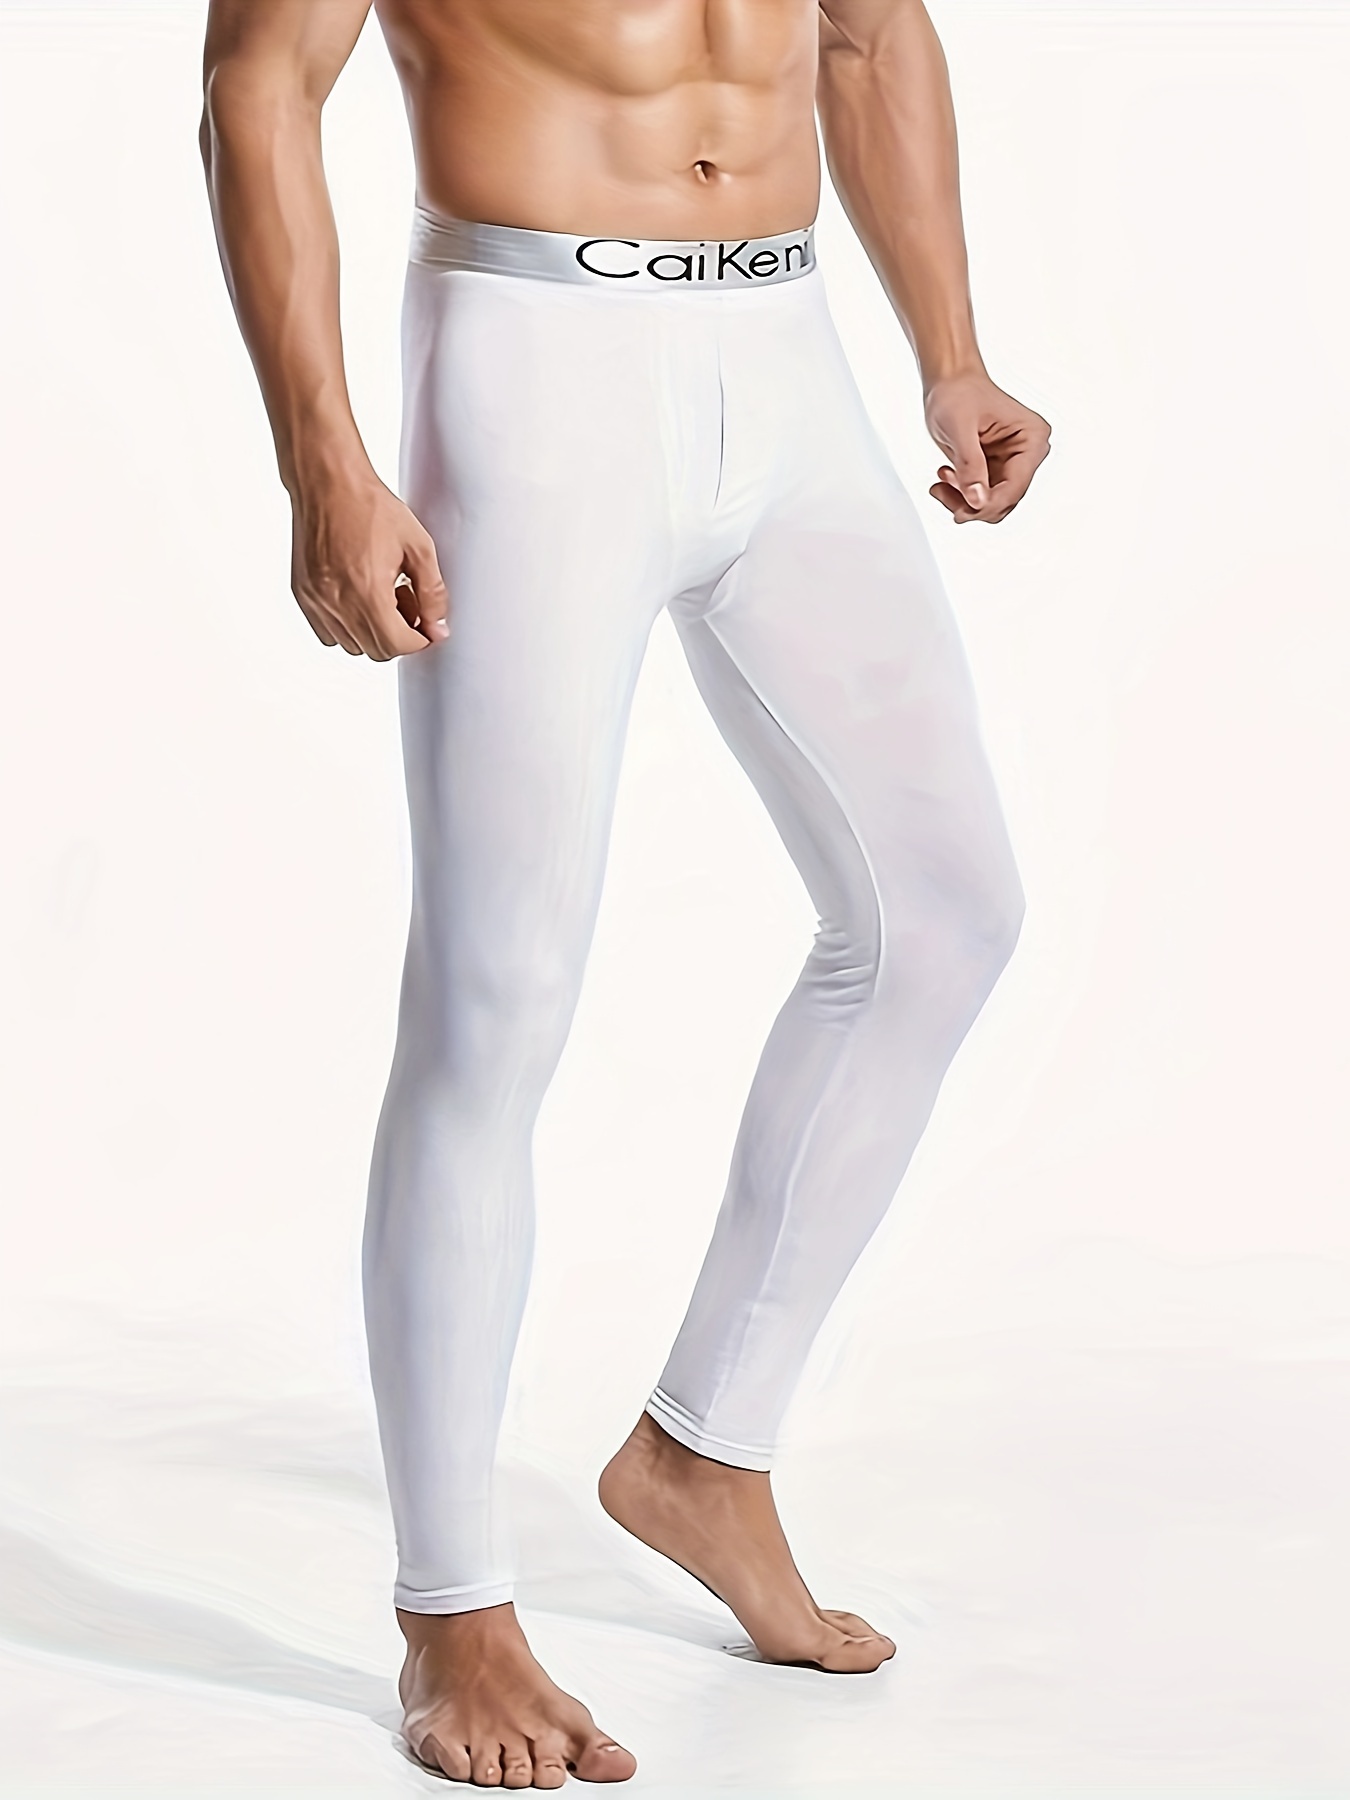 Men's Stretch Smooth Underwear Long Johns Pants Thermal Bulge